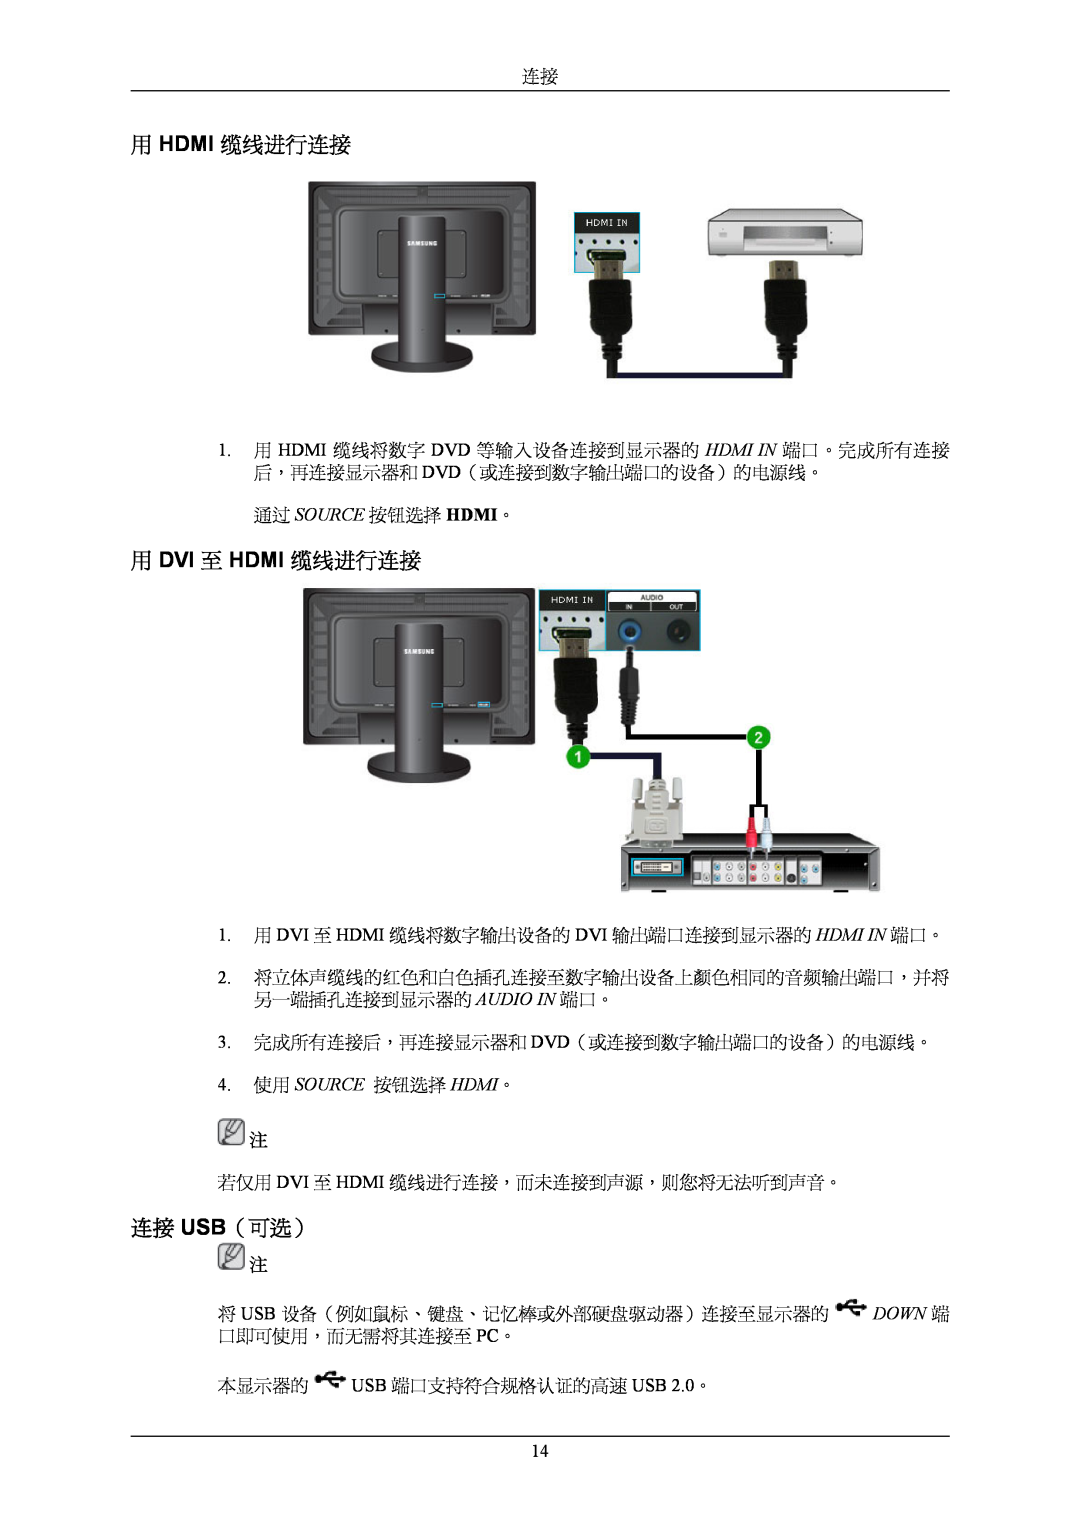 Samsung LS26KIEEFV/EDC, LS26KIERBV/EDC manual 用 Hdmi 缆线进行连接, 用 Dvi 至 Hdmi 缆线进行连接, 连接 Usb（可选）, 4. 使用 SOURCE 按钮选择 HDMI。 